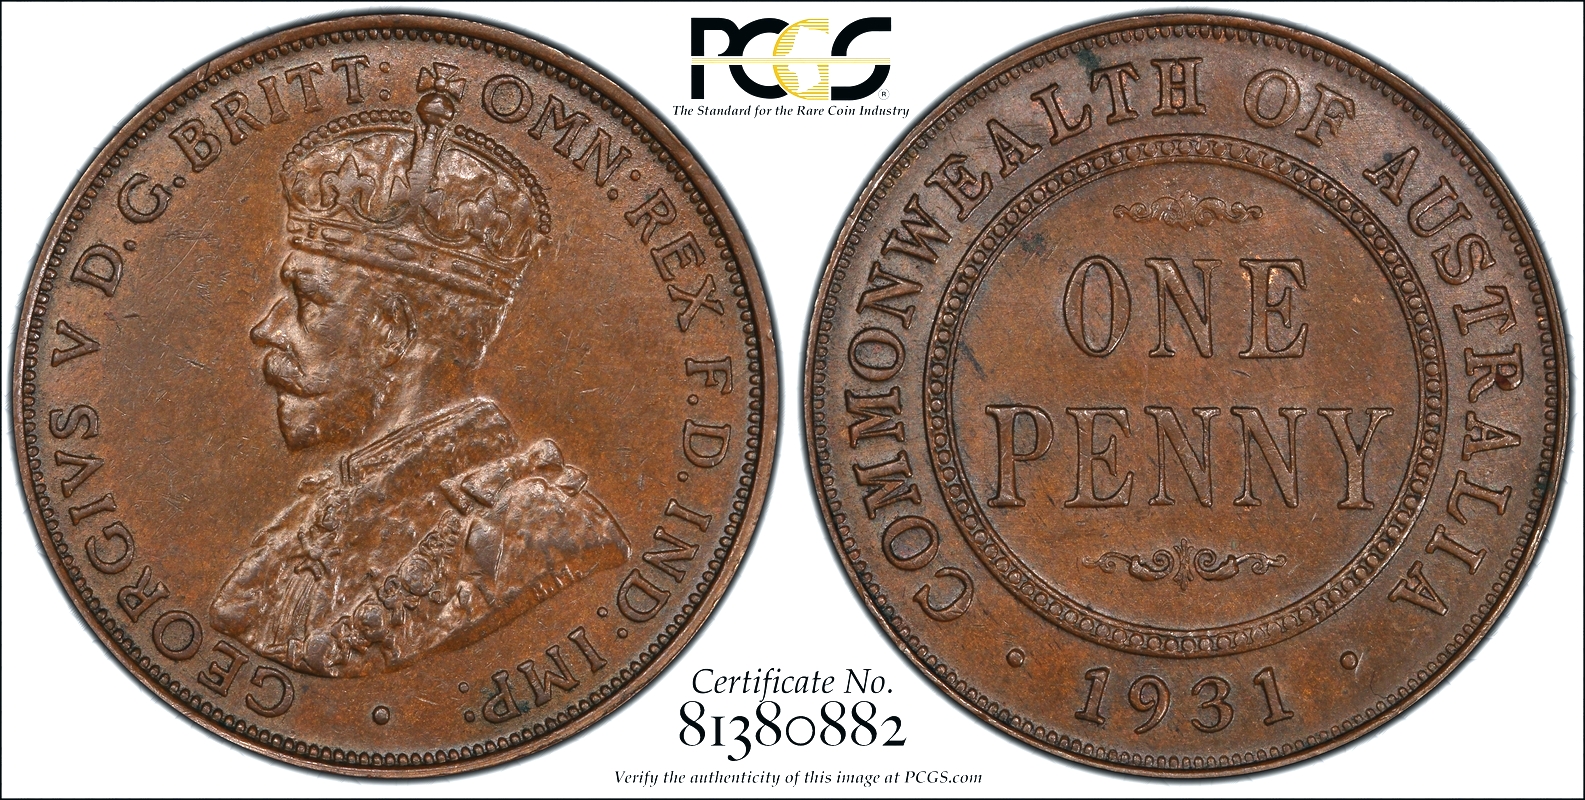 1931 Australian Penny, normal 1 London, PCGS MS62BN (Unc)